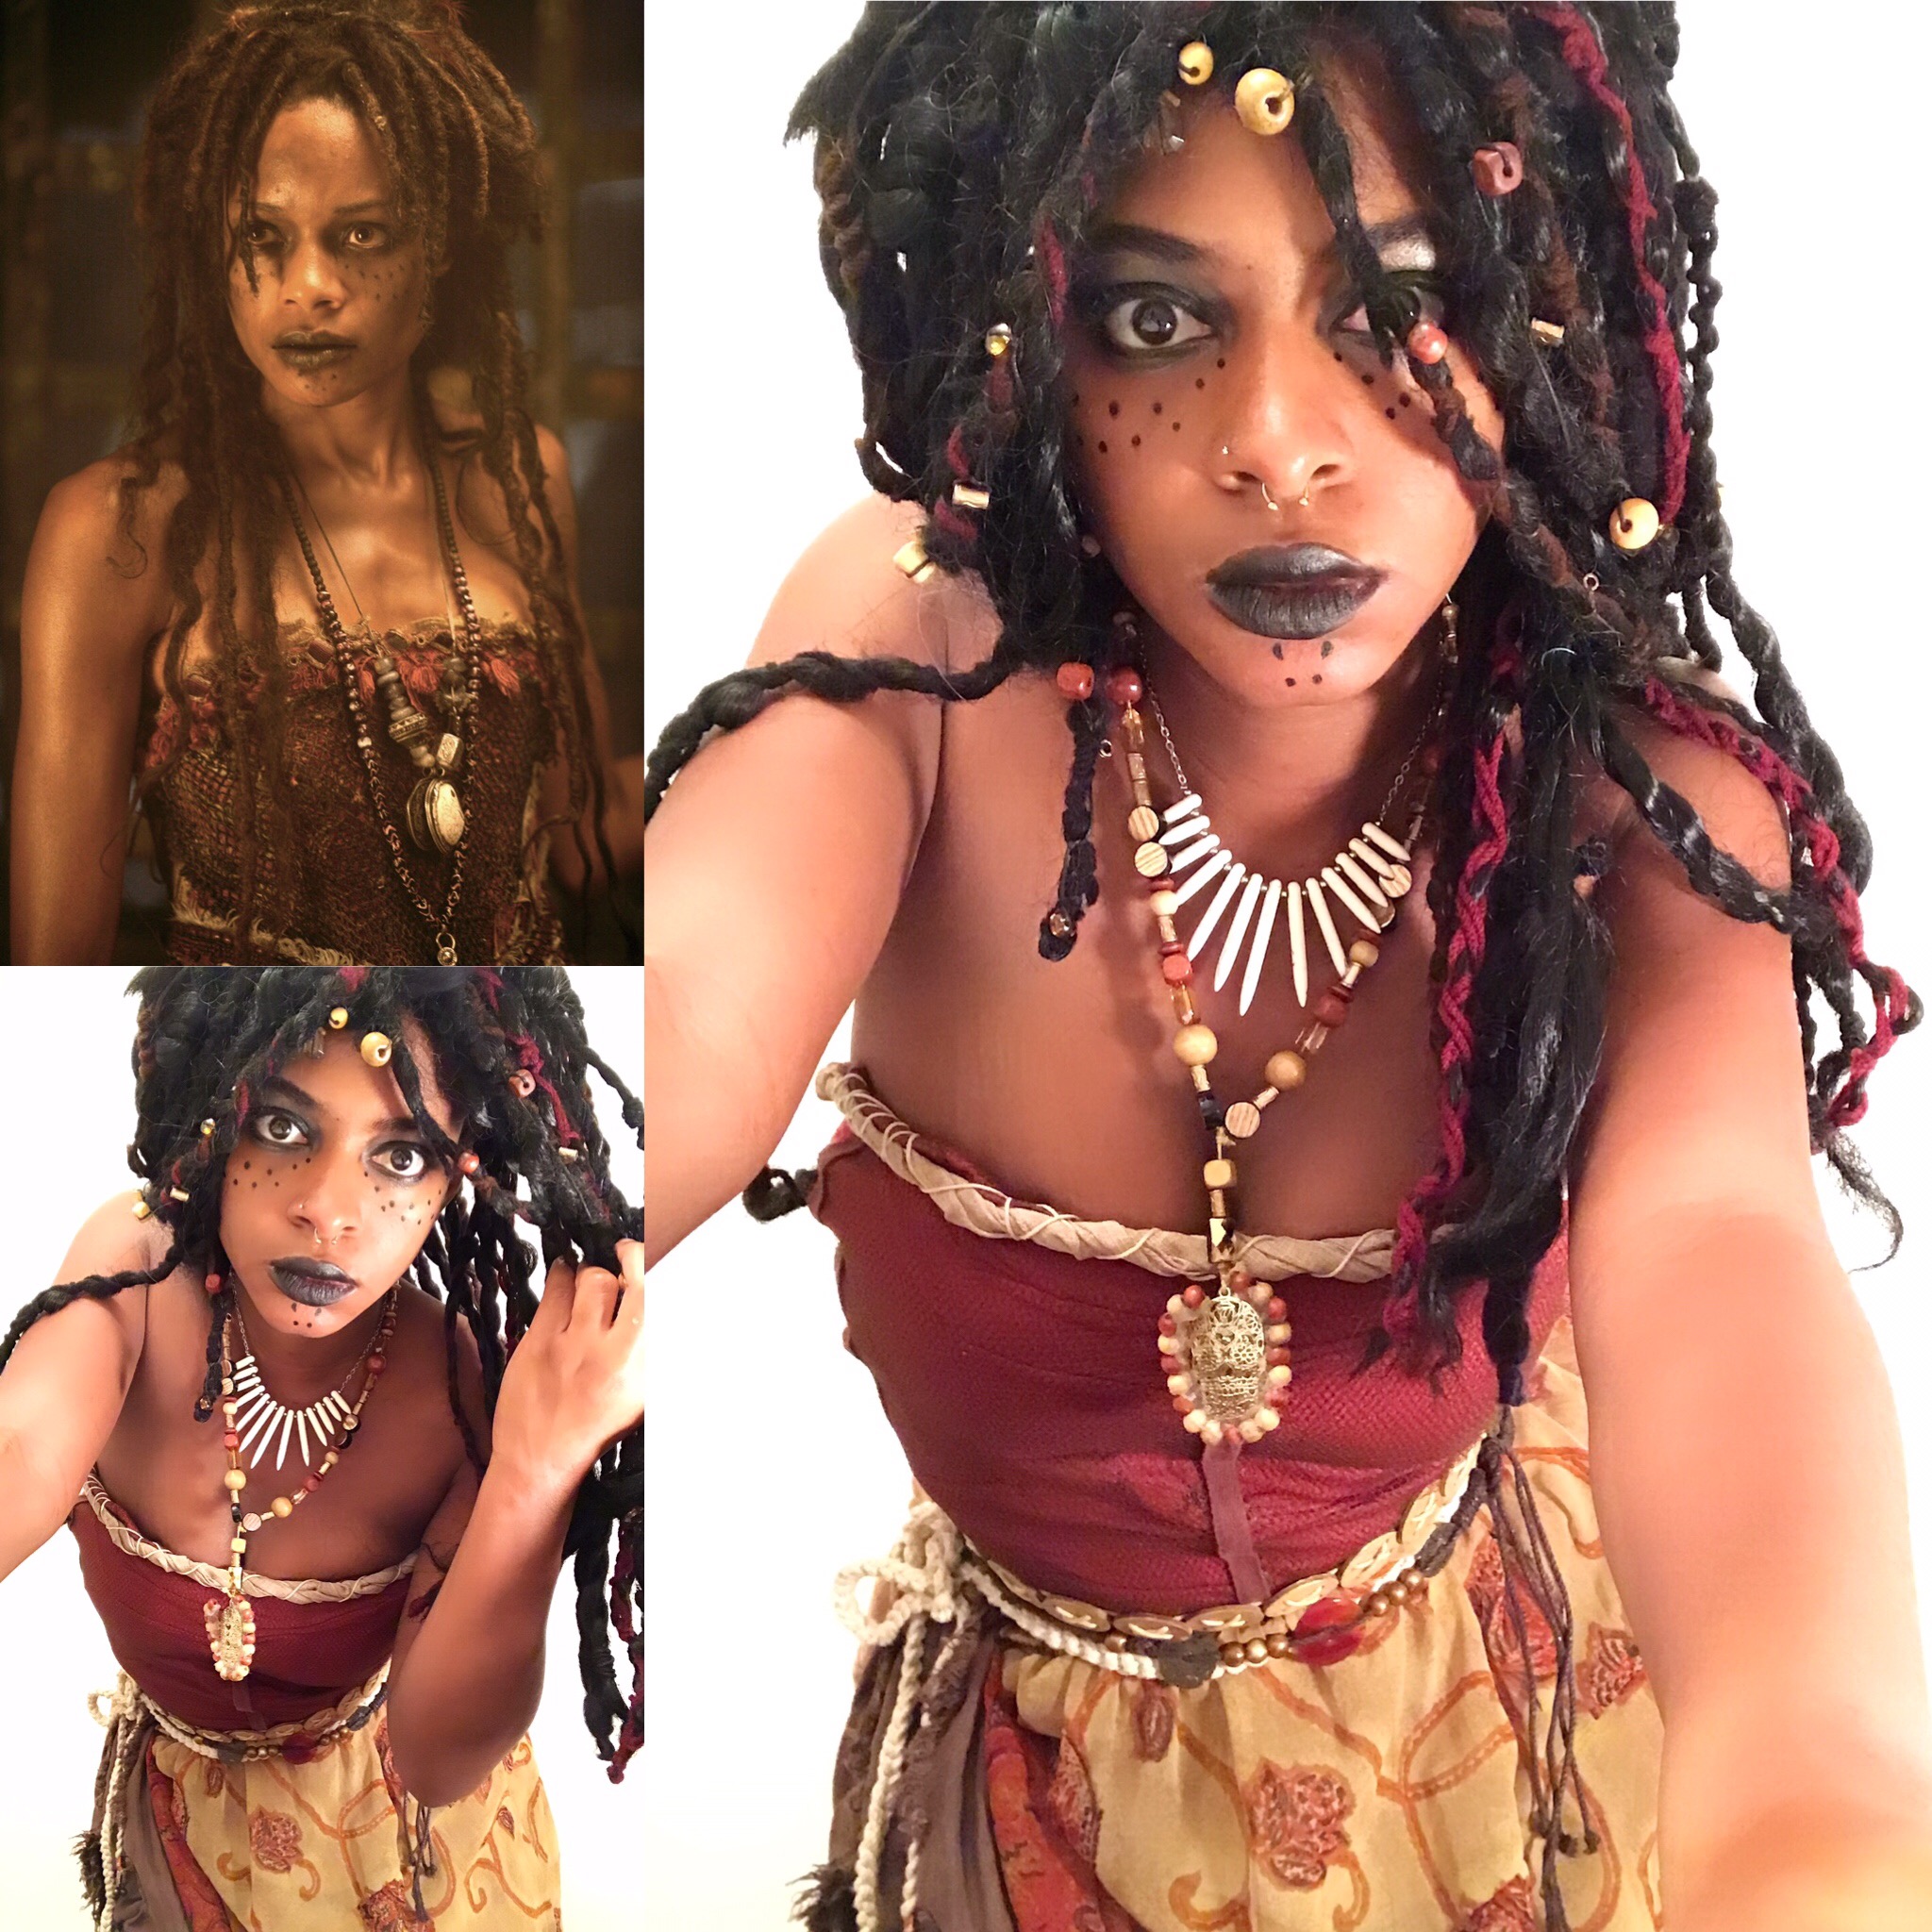 DeLa Doll - Tia Dalma/Calypso (Pirates of the Caribbean) Cosplay